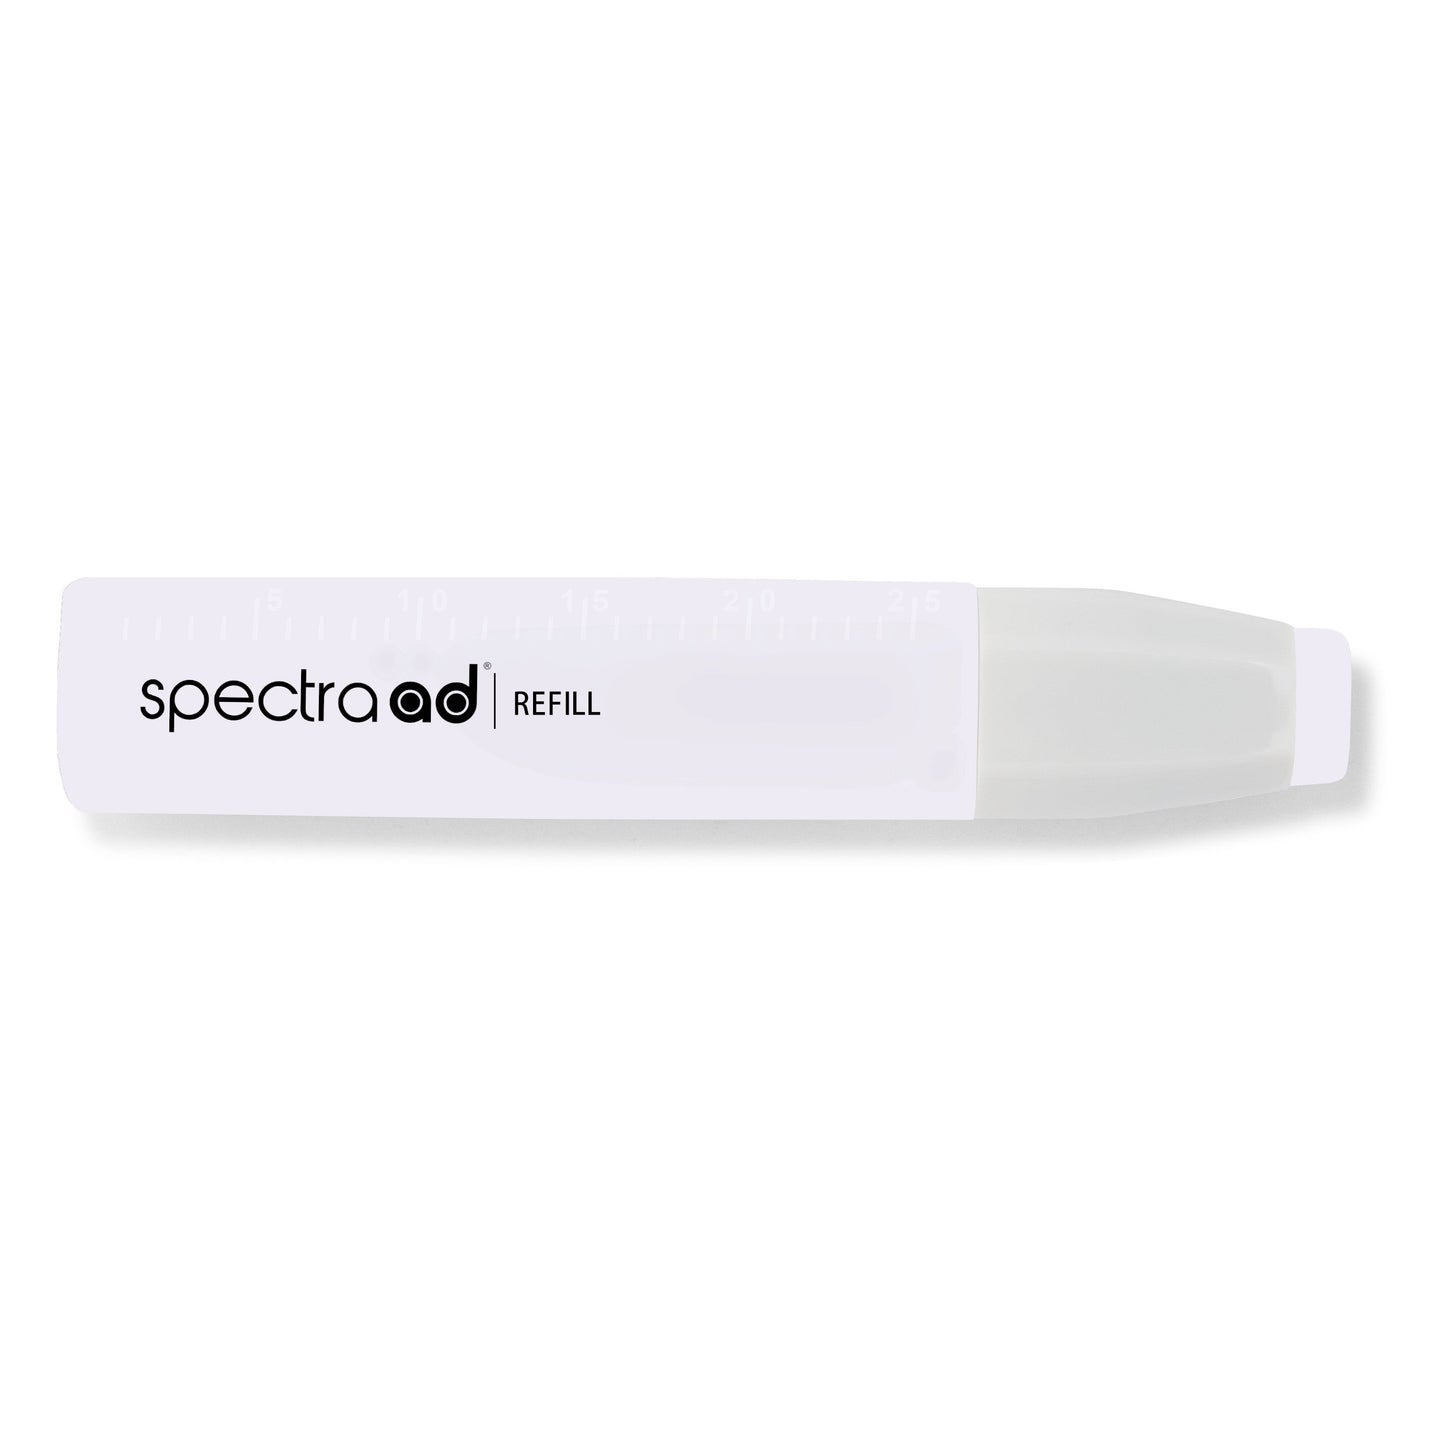 065 - Light Periwinkle - Spectra AD Refill Bottle